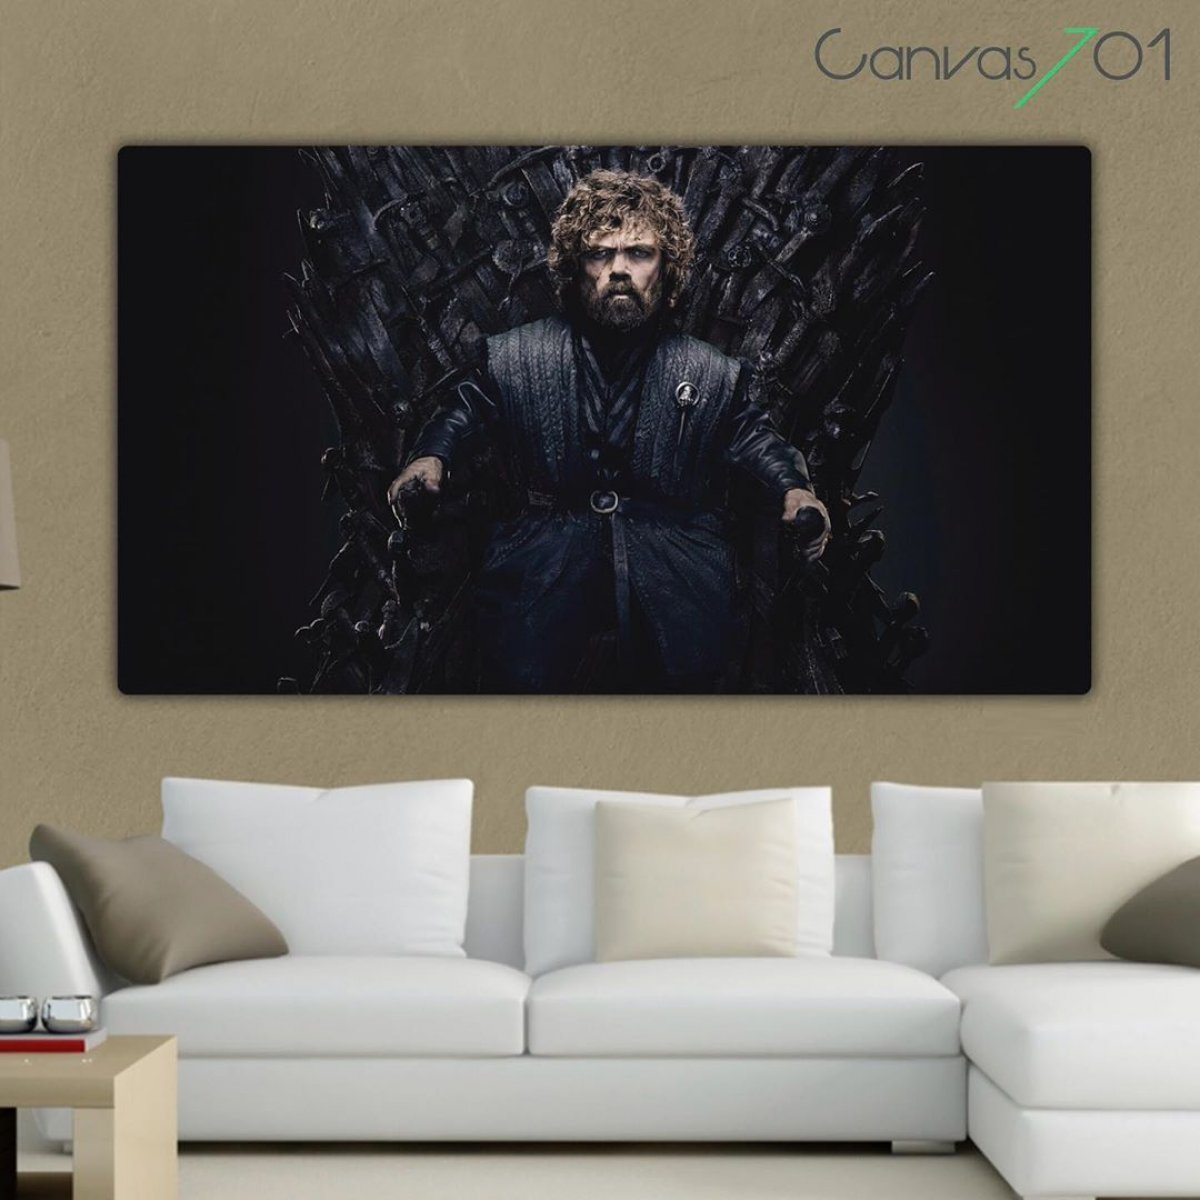 Canvas701 | Game of Thrones Tyrion Lannister Taht - GOT Kanvas Tablo